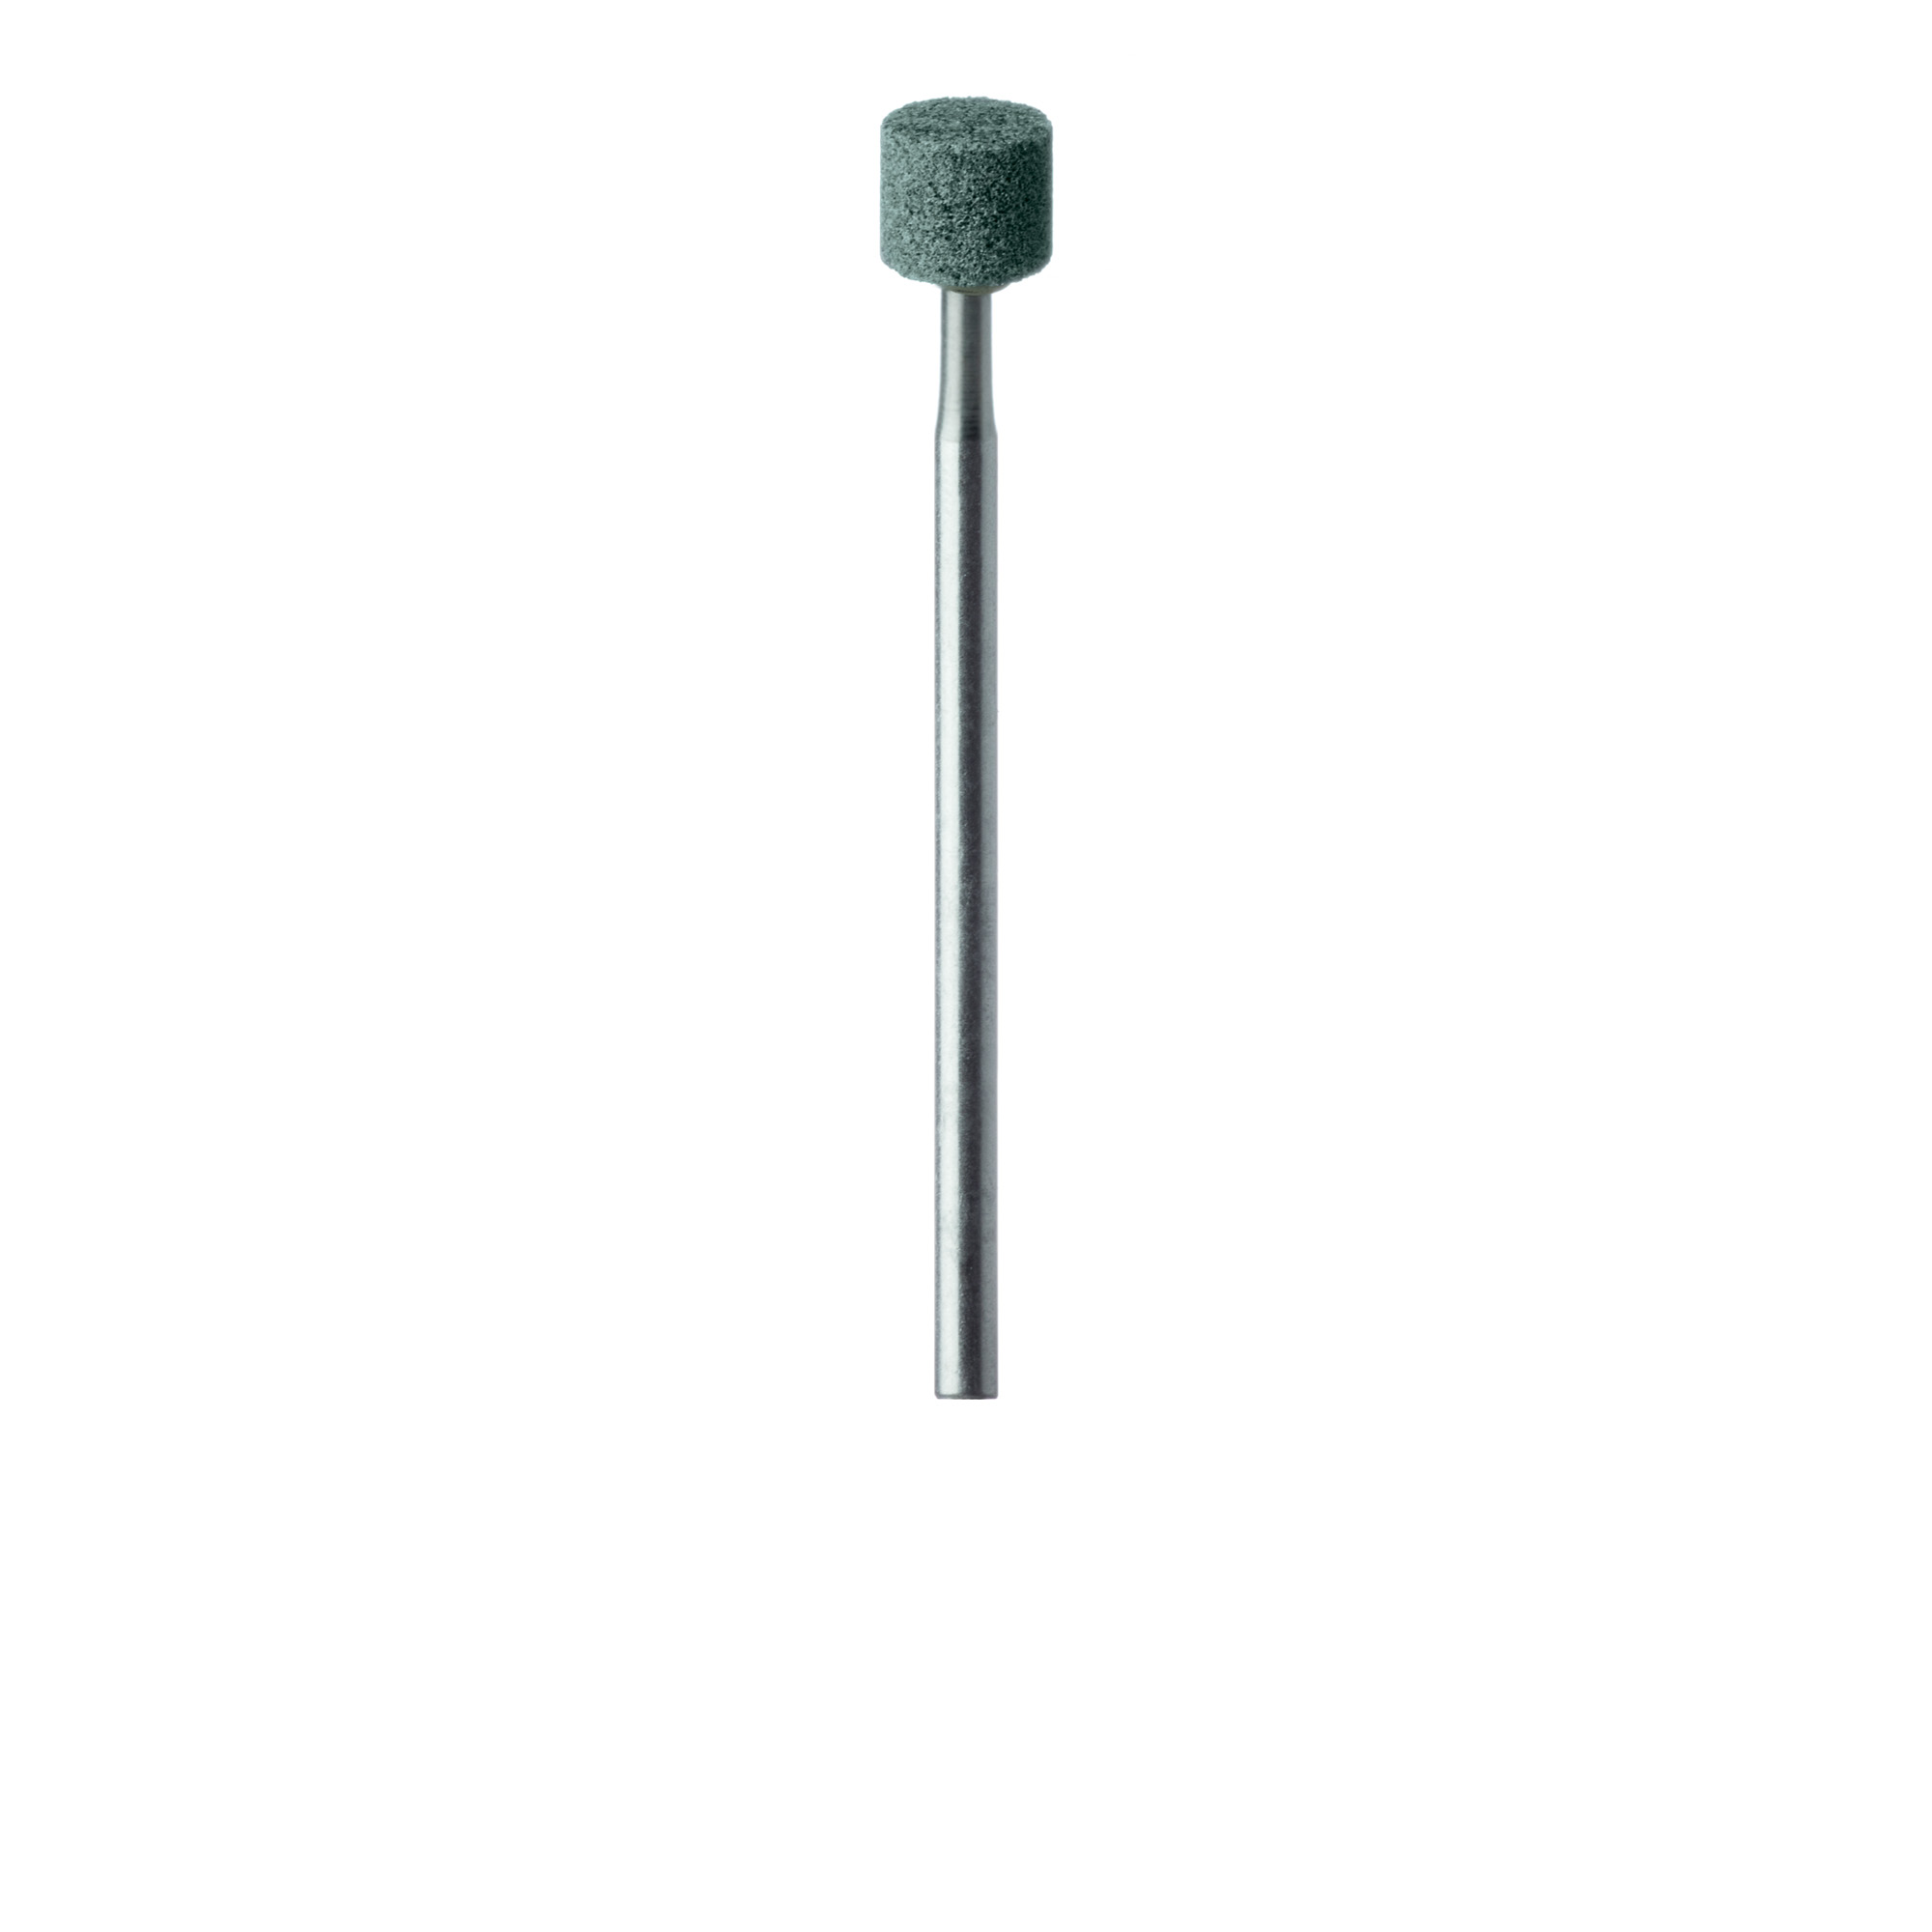 624-060-HP-GRN Abrasive, Green, Cylinder, 6mm Ø, Medium, HP